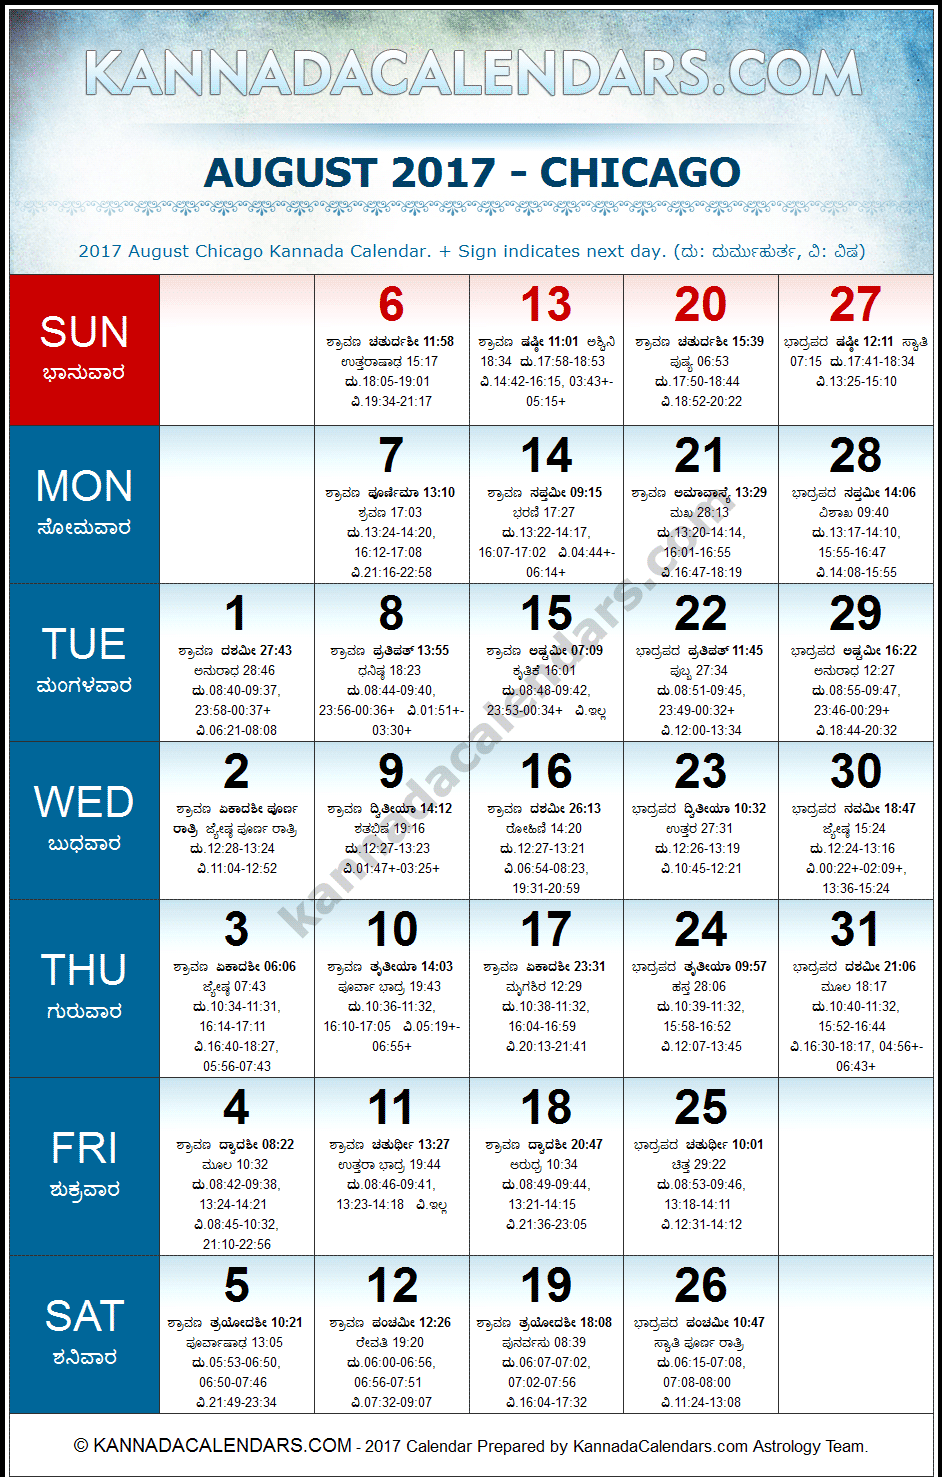 August 2017 Kannada Calendar for Chicago, USA